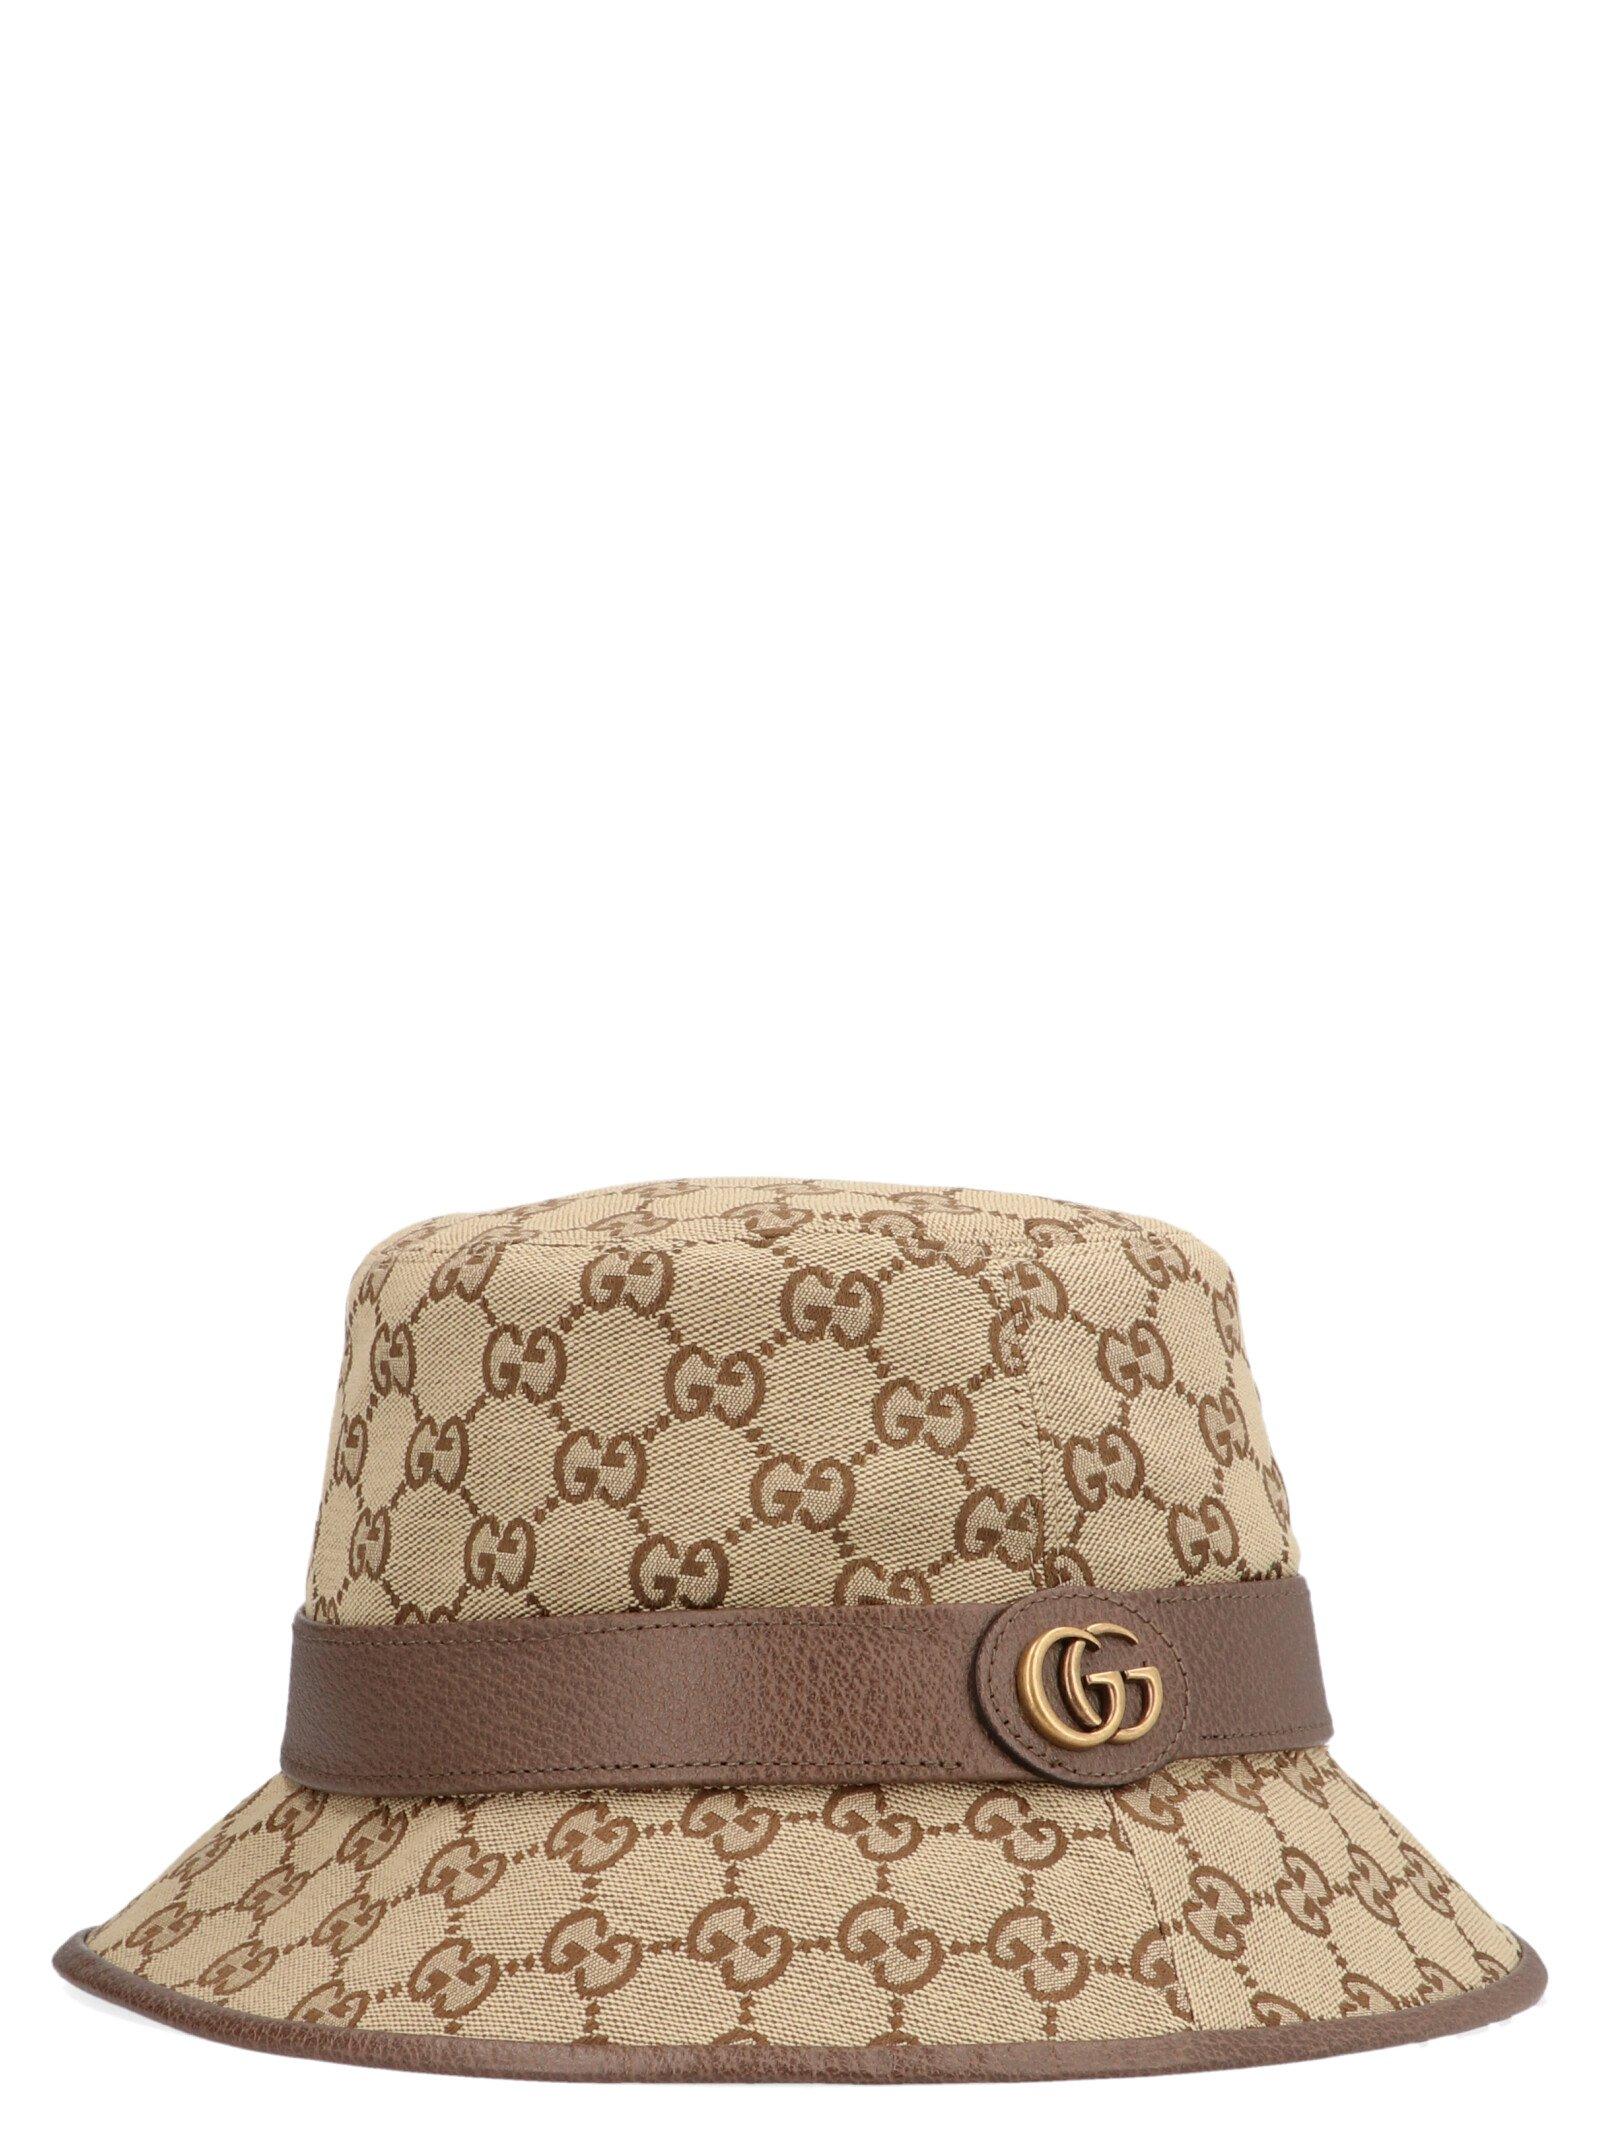 Gucci Monogrammed Canvas Bucket Hat in Beige (Natural) - Save 42% | Lyst